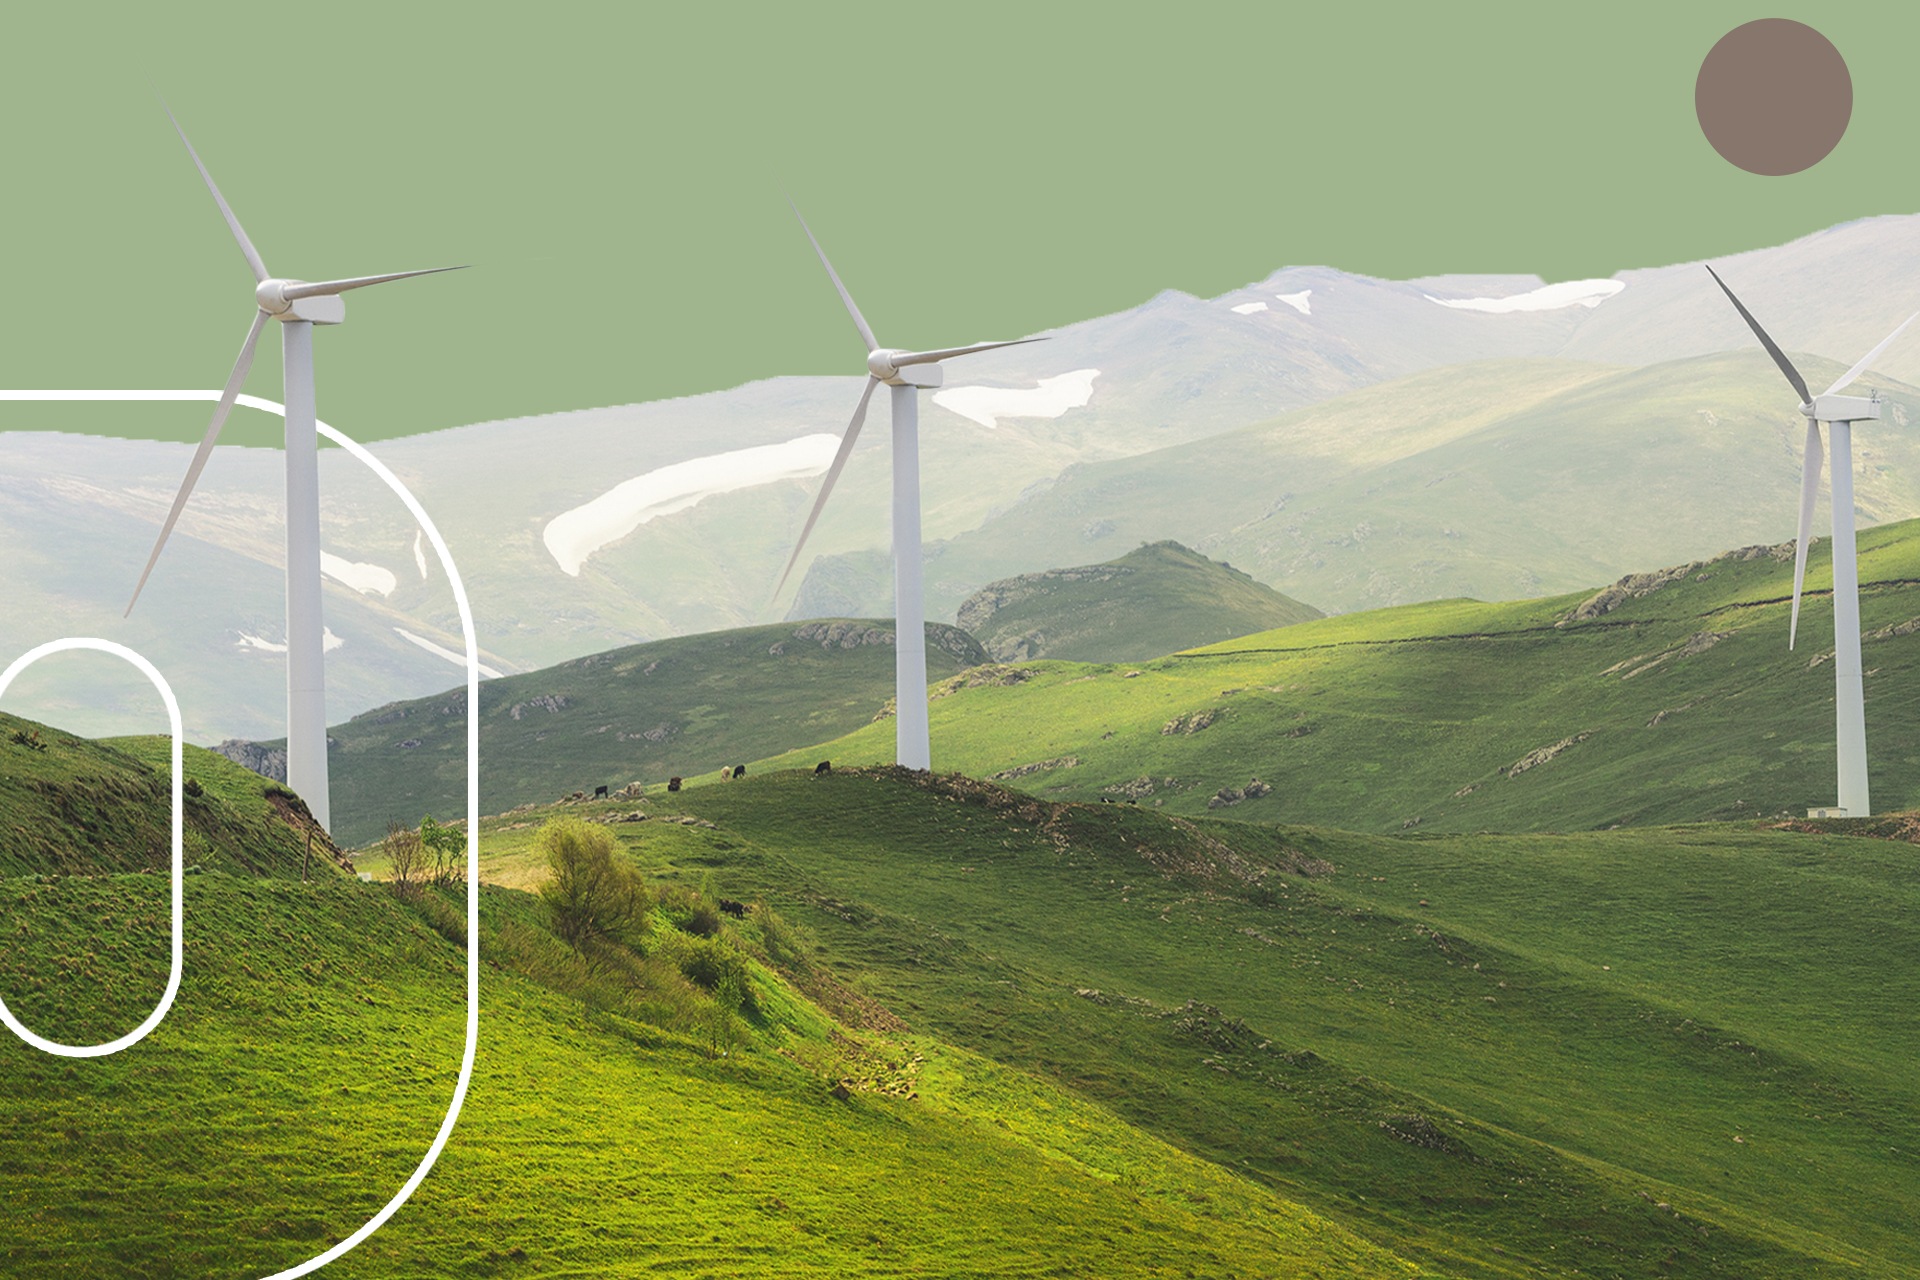 alternatives to fossil fuels like wind turbines in mountain range